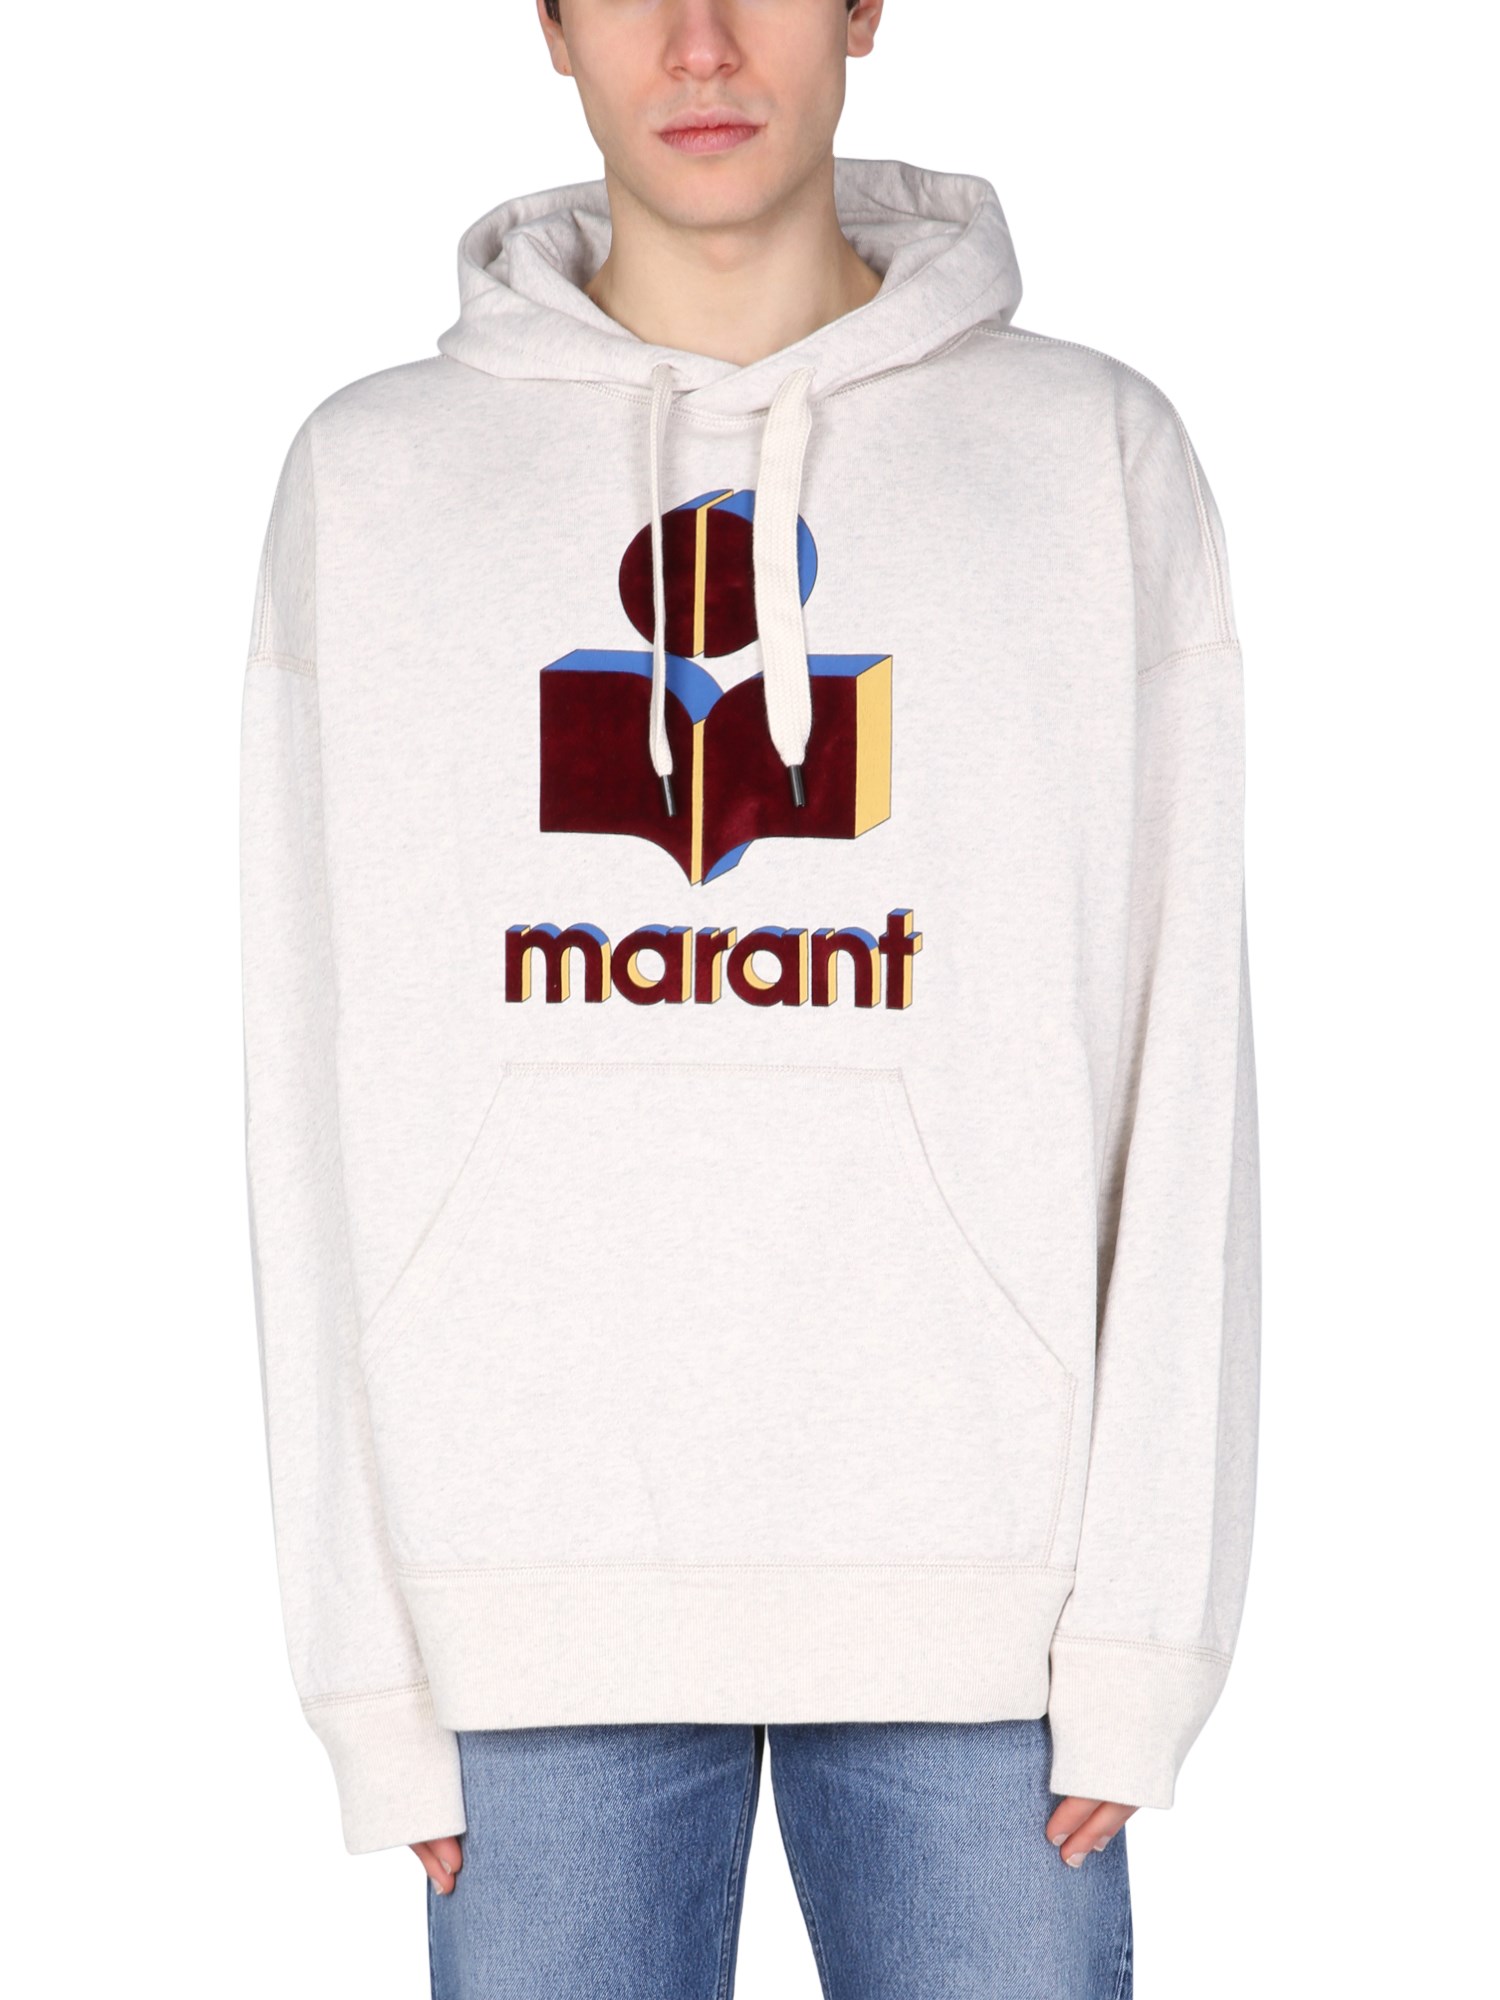 isabel marant miley sweatshirt with logo